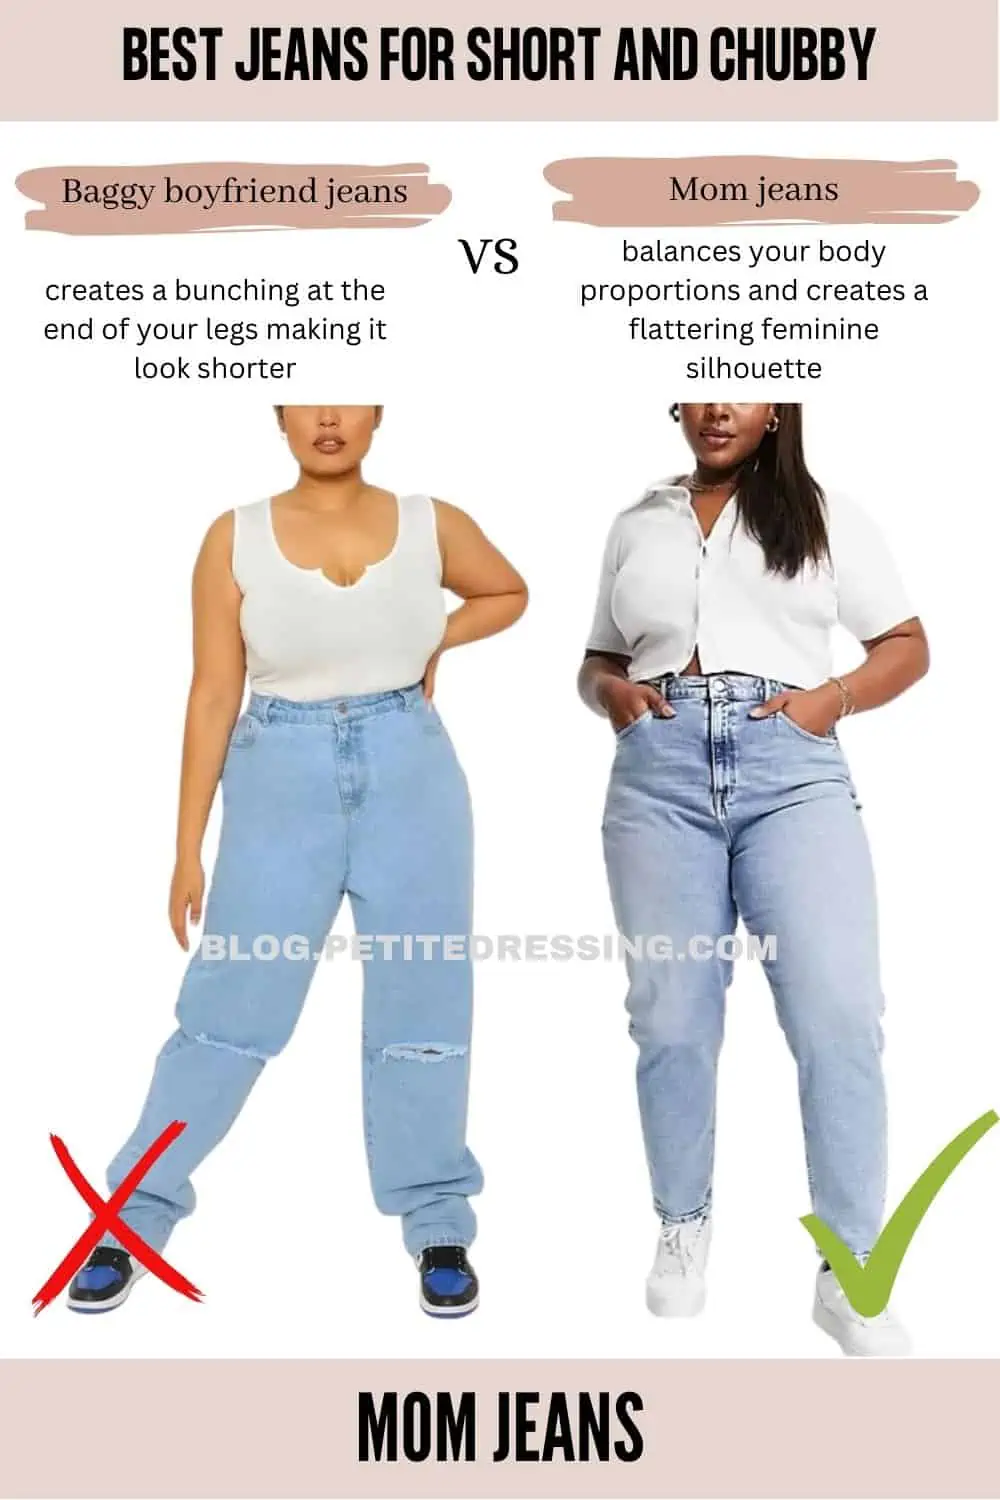 Can a fat girl wear a crop top? - Quora